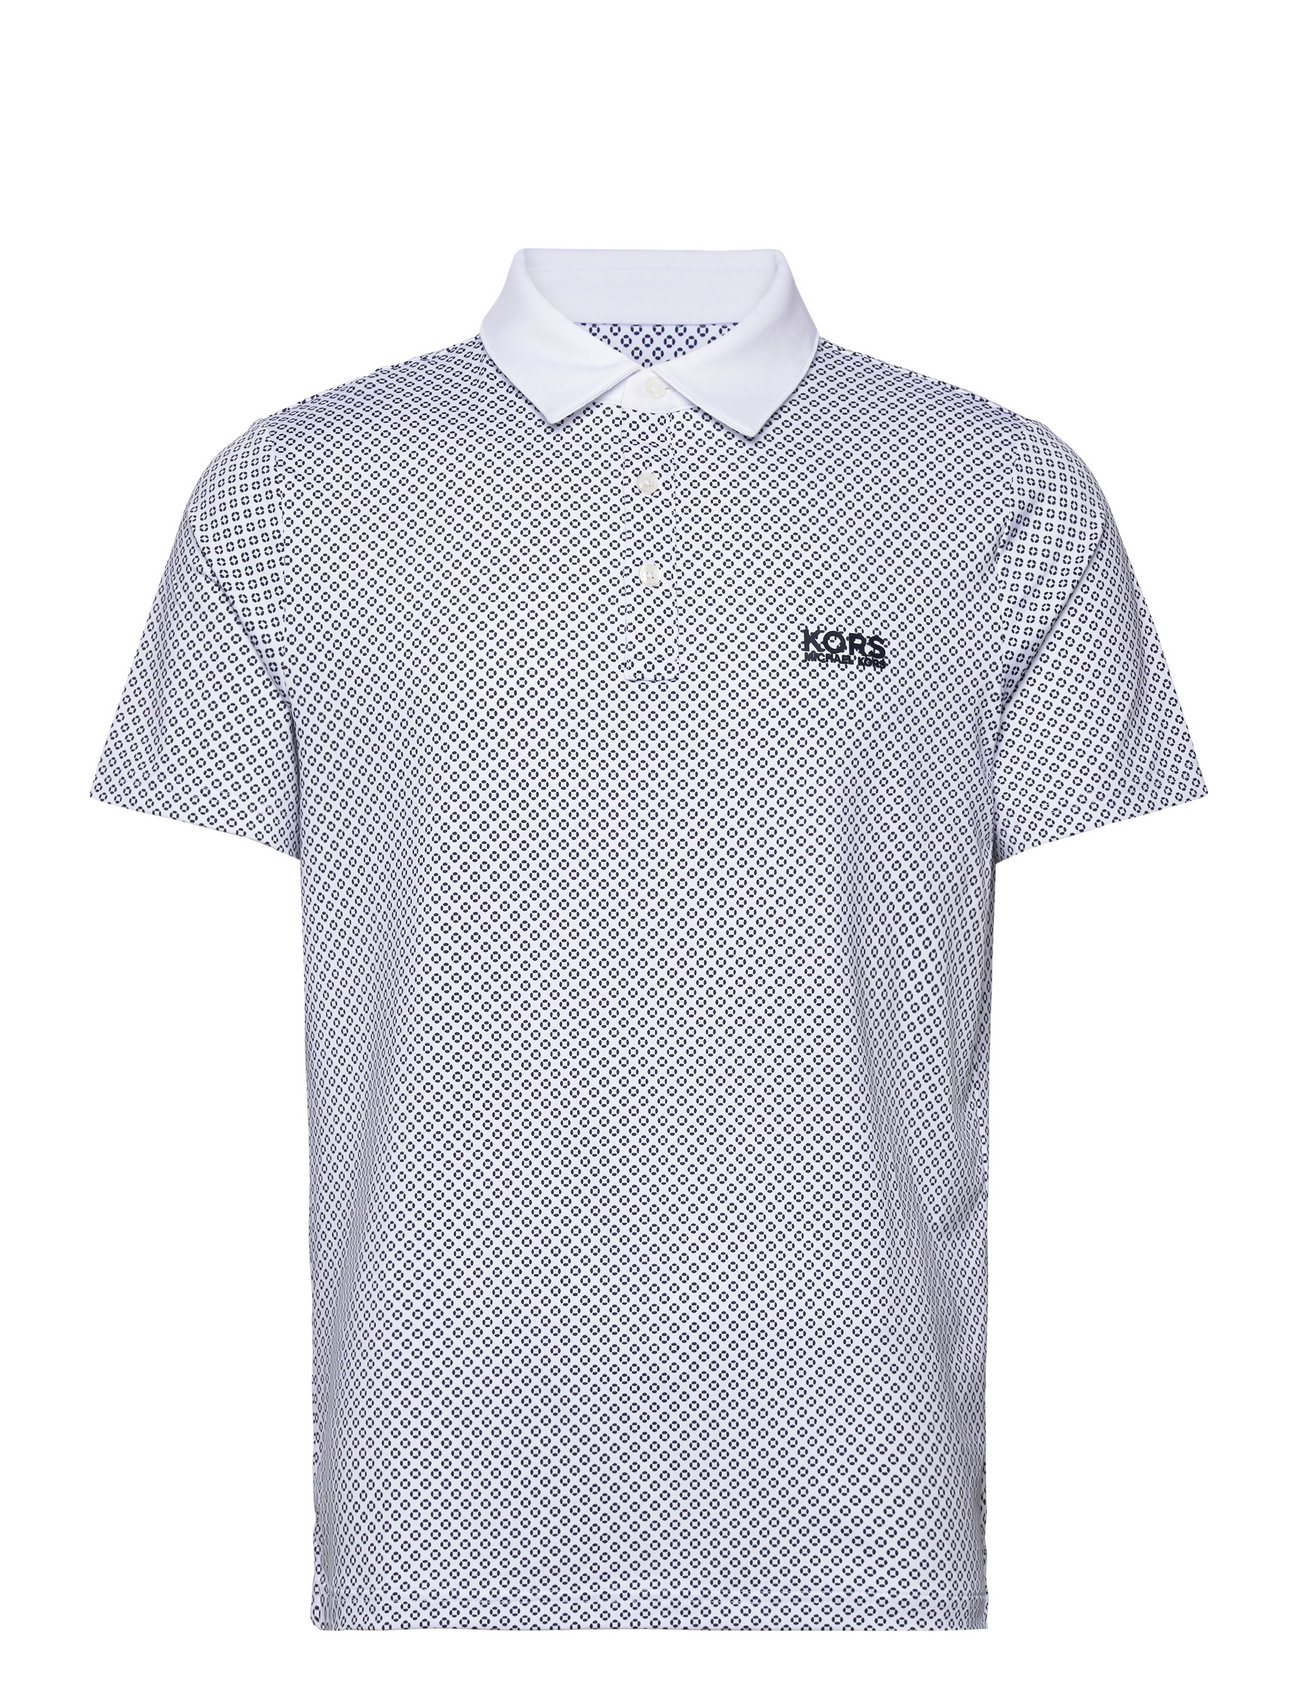 Michael Kors Polo Shirt Mens Medium Short Sleeve Casual Adult Striped Golf   eBay